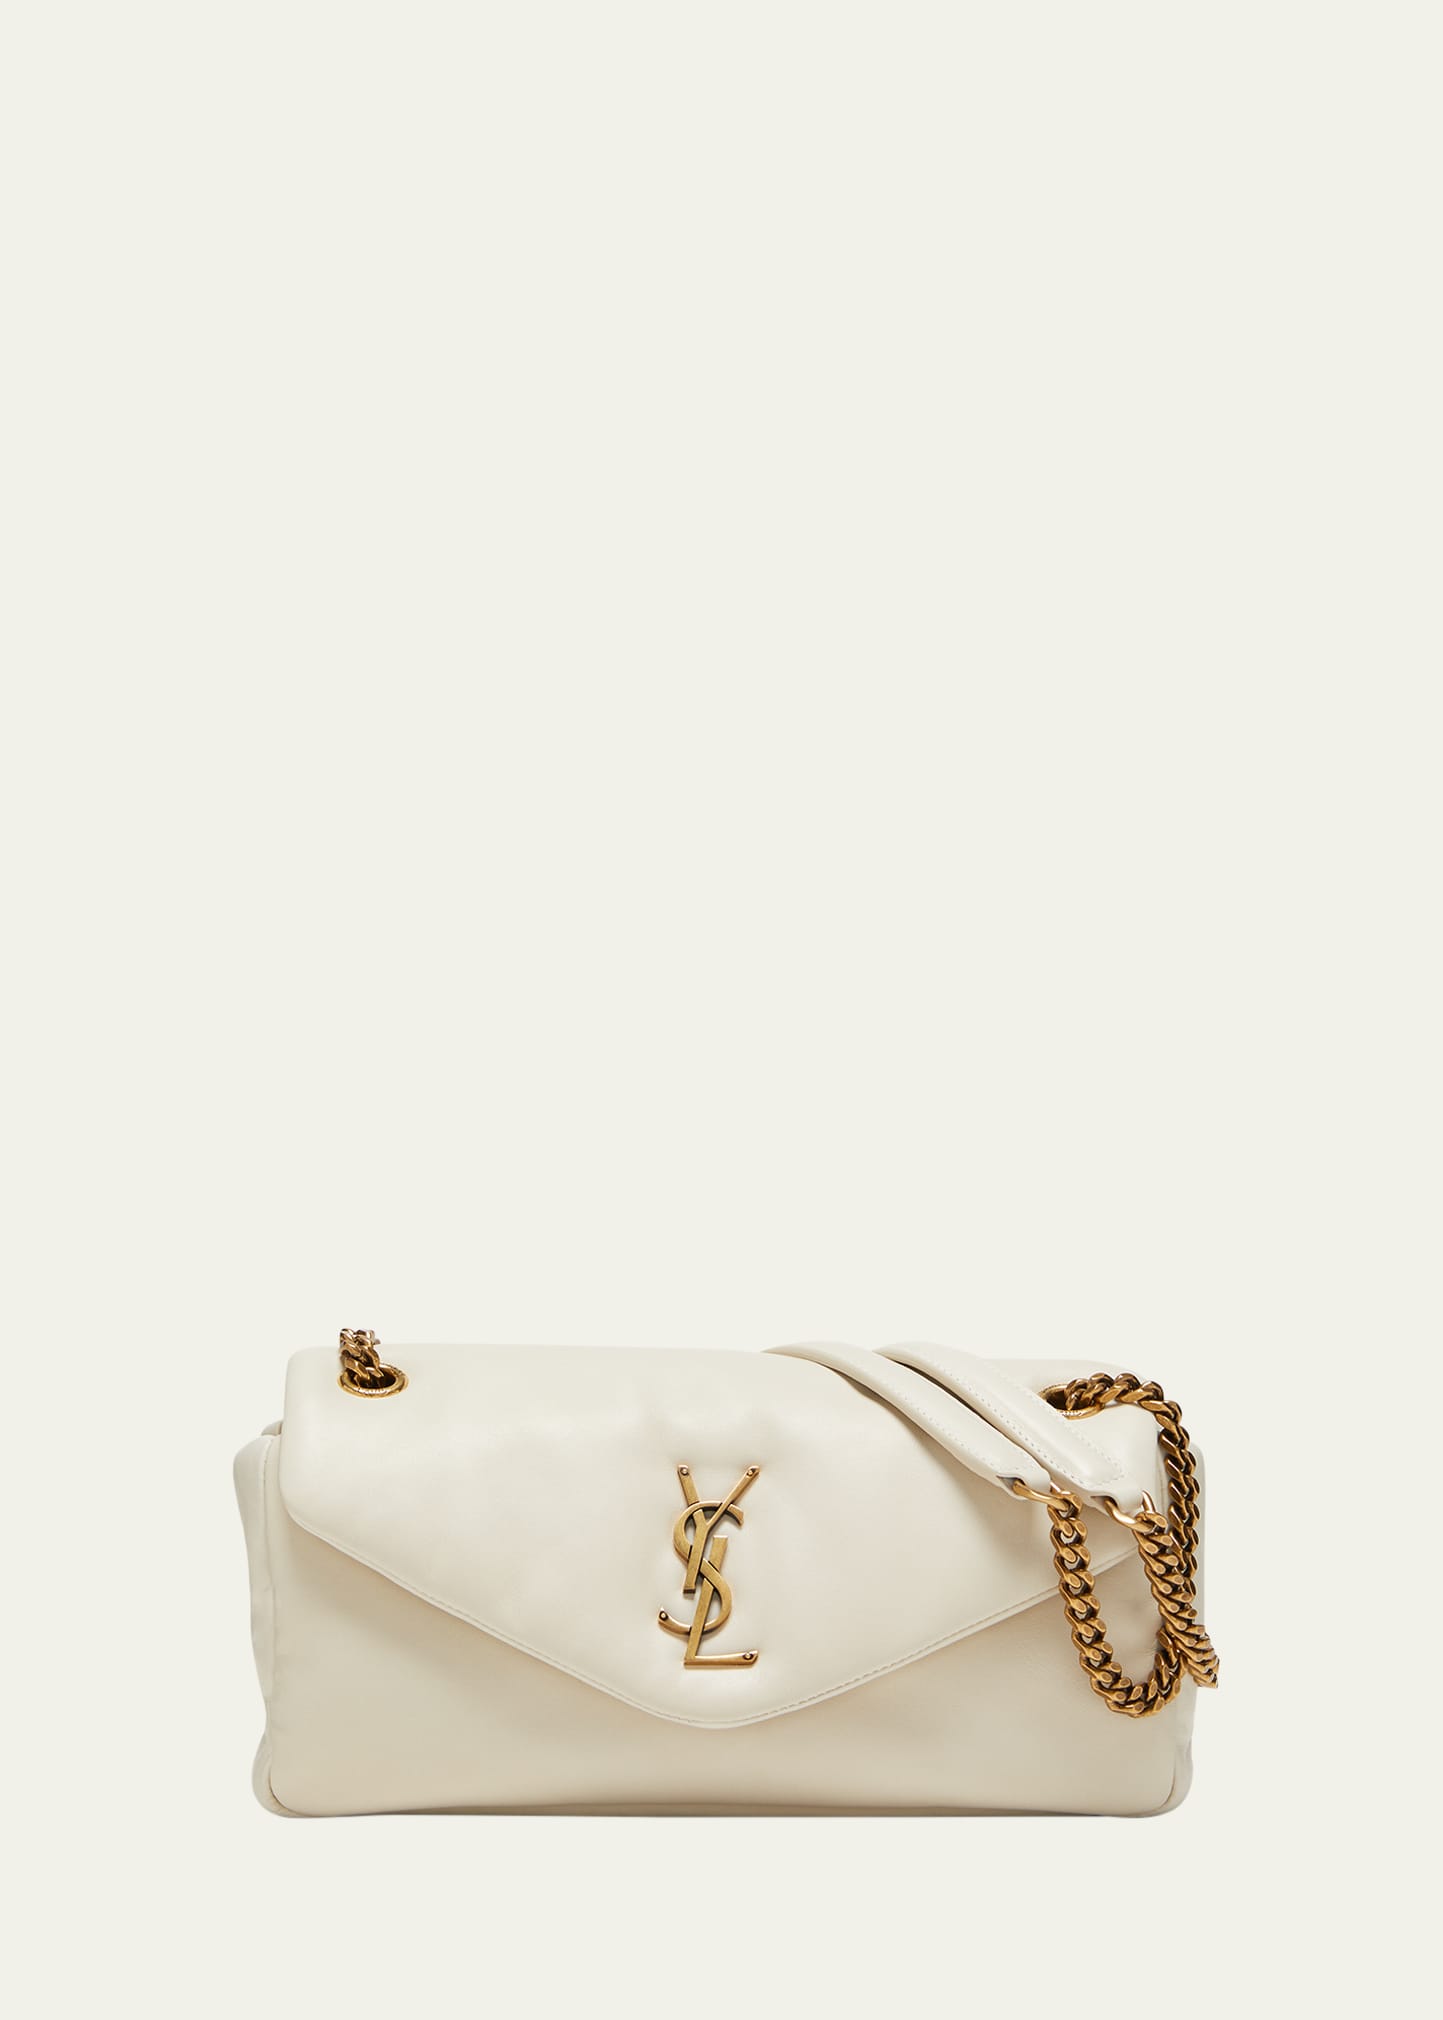 Saint Laurent Sulpice Leather Handbag